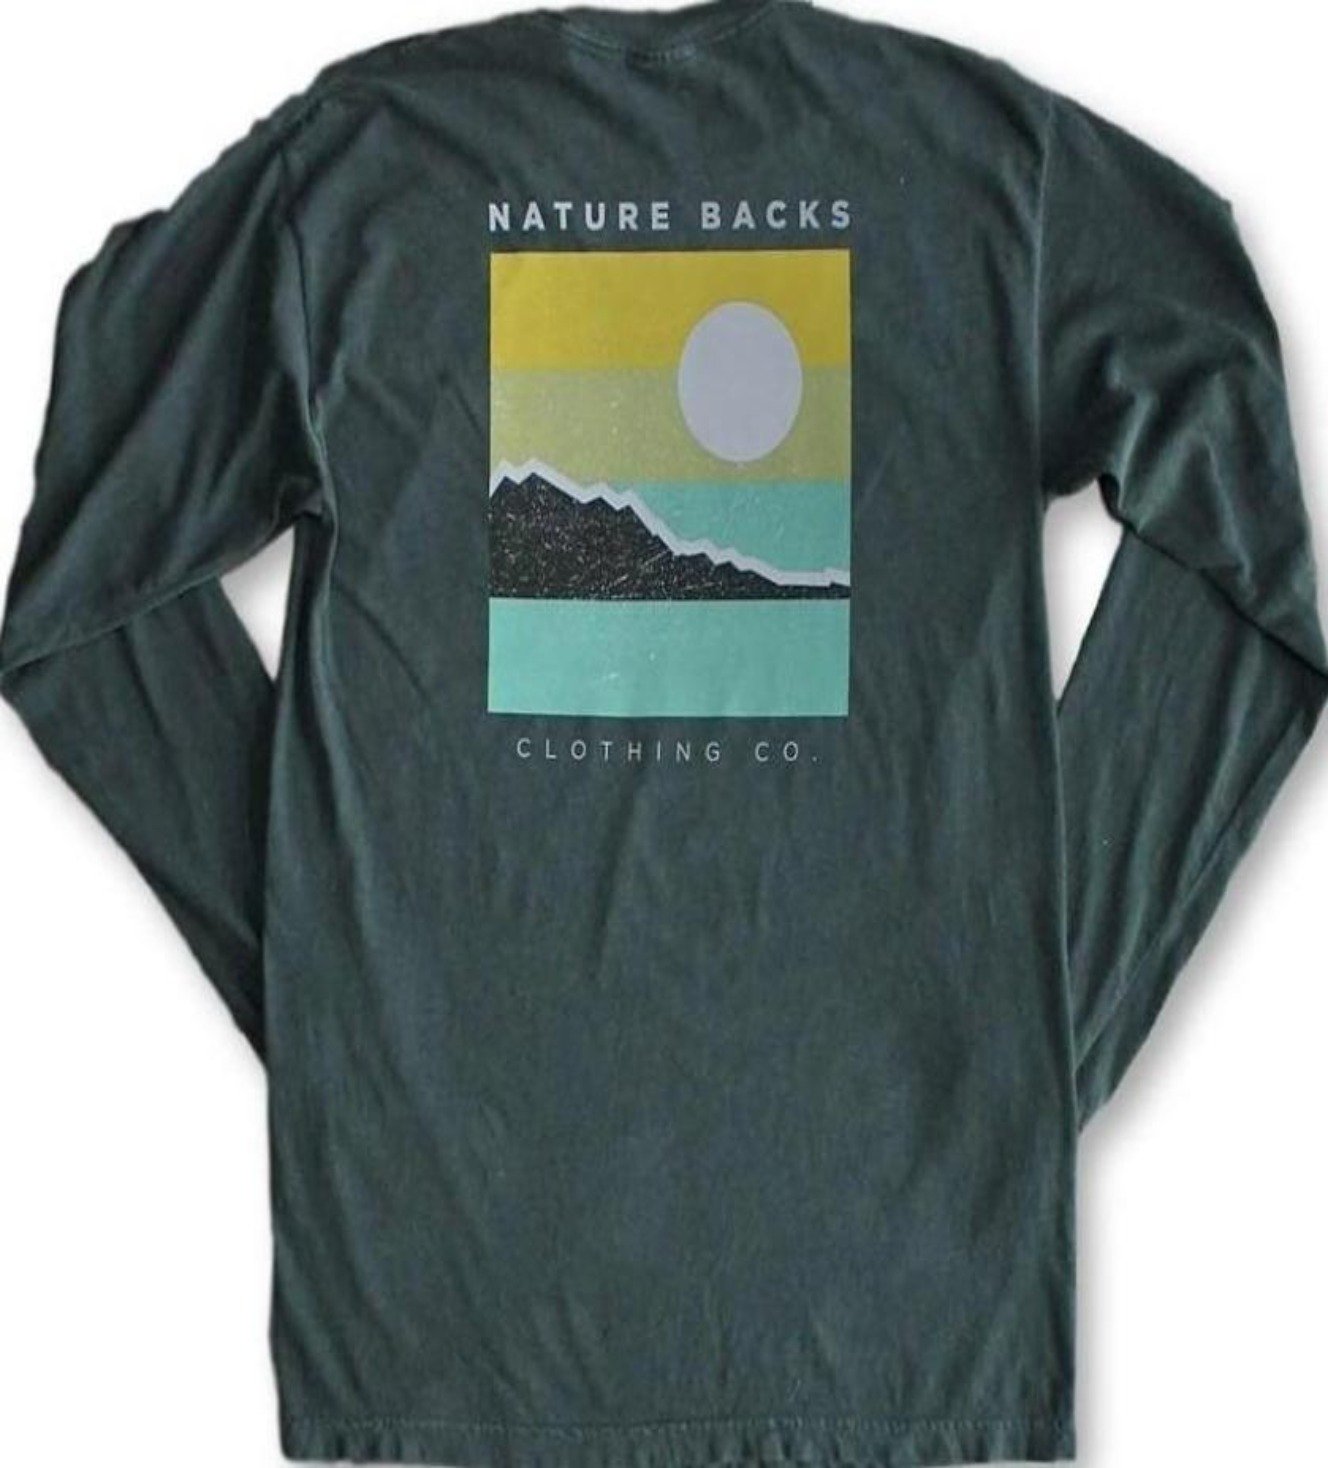 Nature Backs T-Shirts and